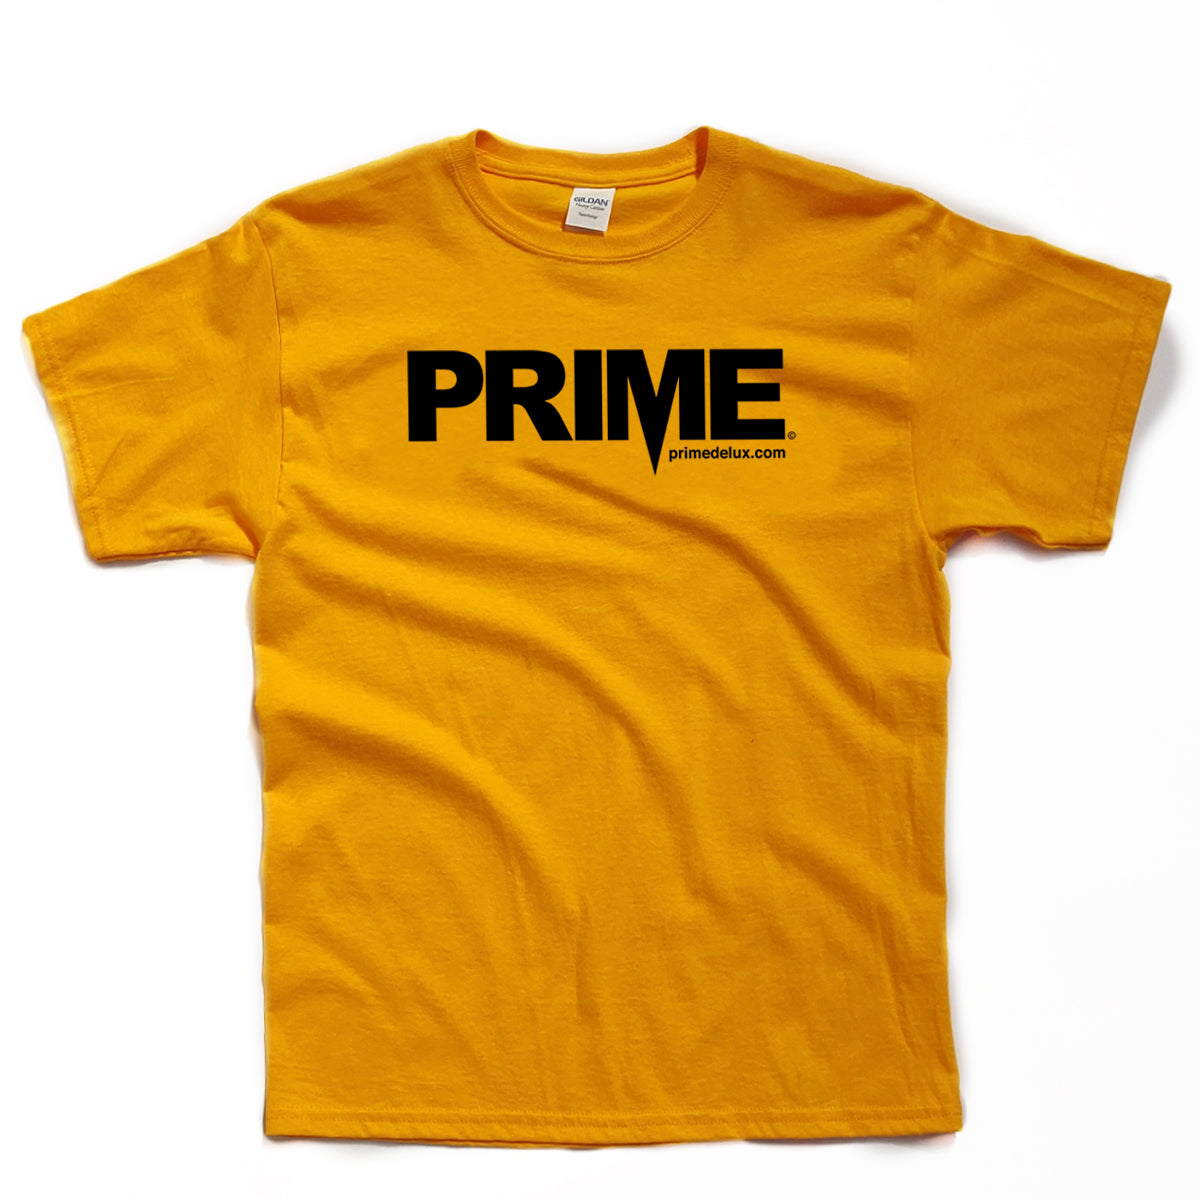 Prime Delux OG Logo Kids T Shirt - Taxi Yellow / Black - Prime Delux Store